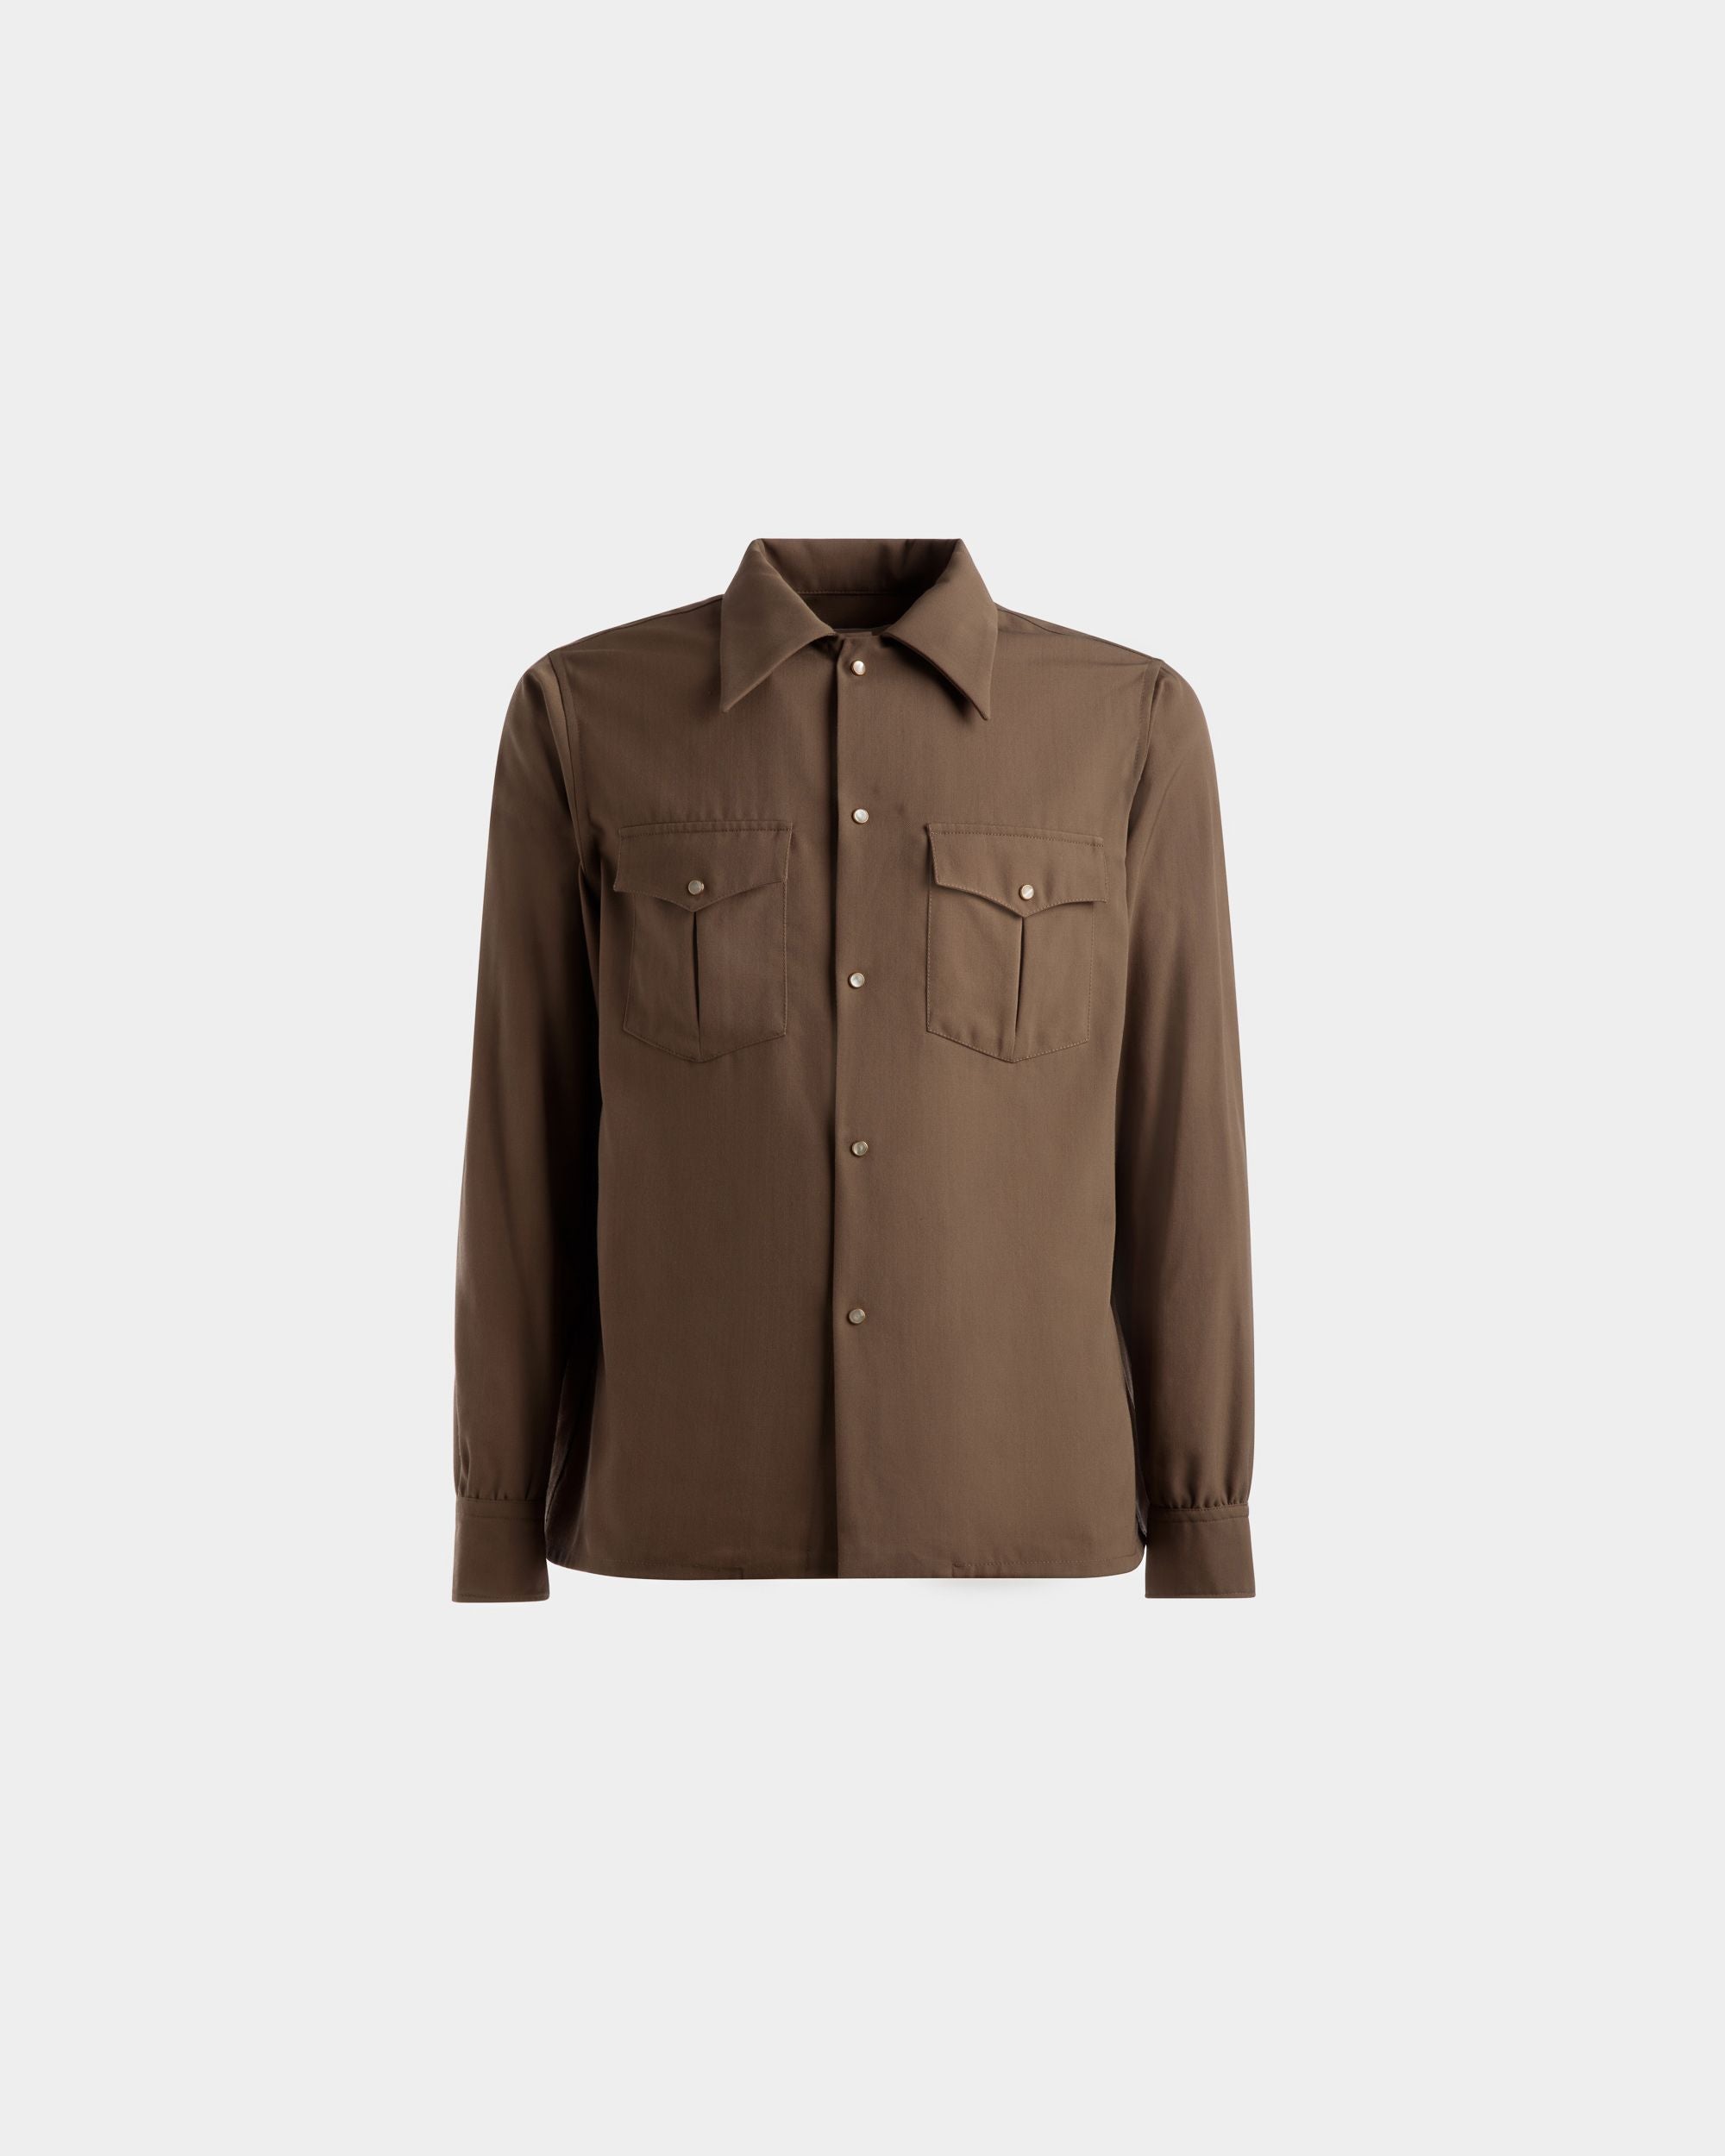 Pointed Collar Shirt | Men's Shirt | Sepia Wool Mix | Bally | Still Life Front